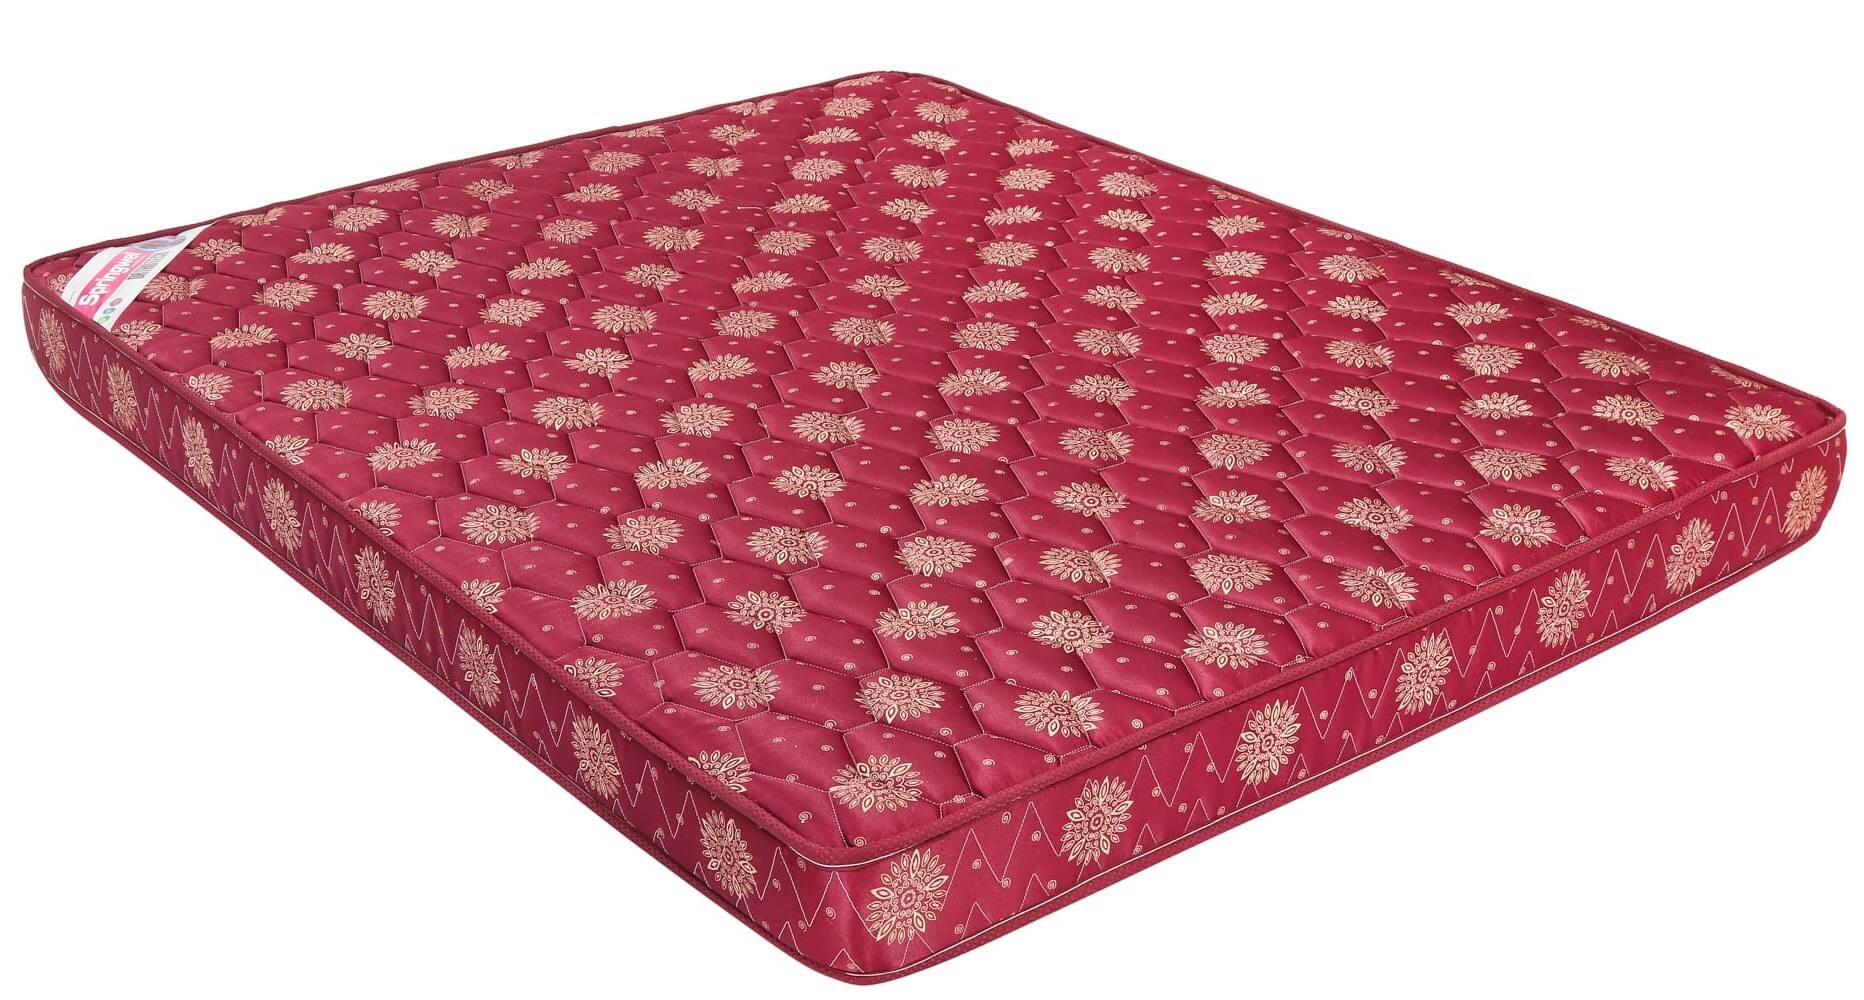 springwel mattress price list